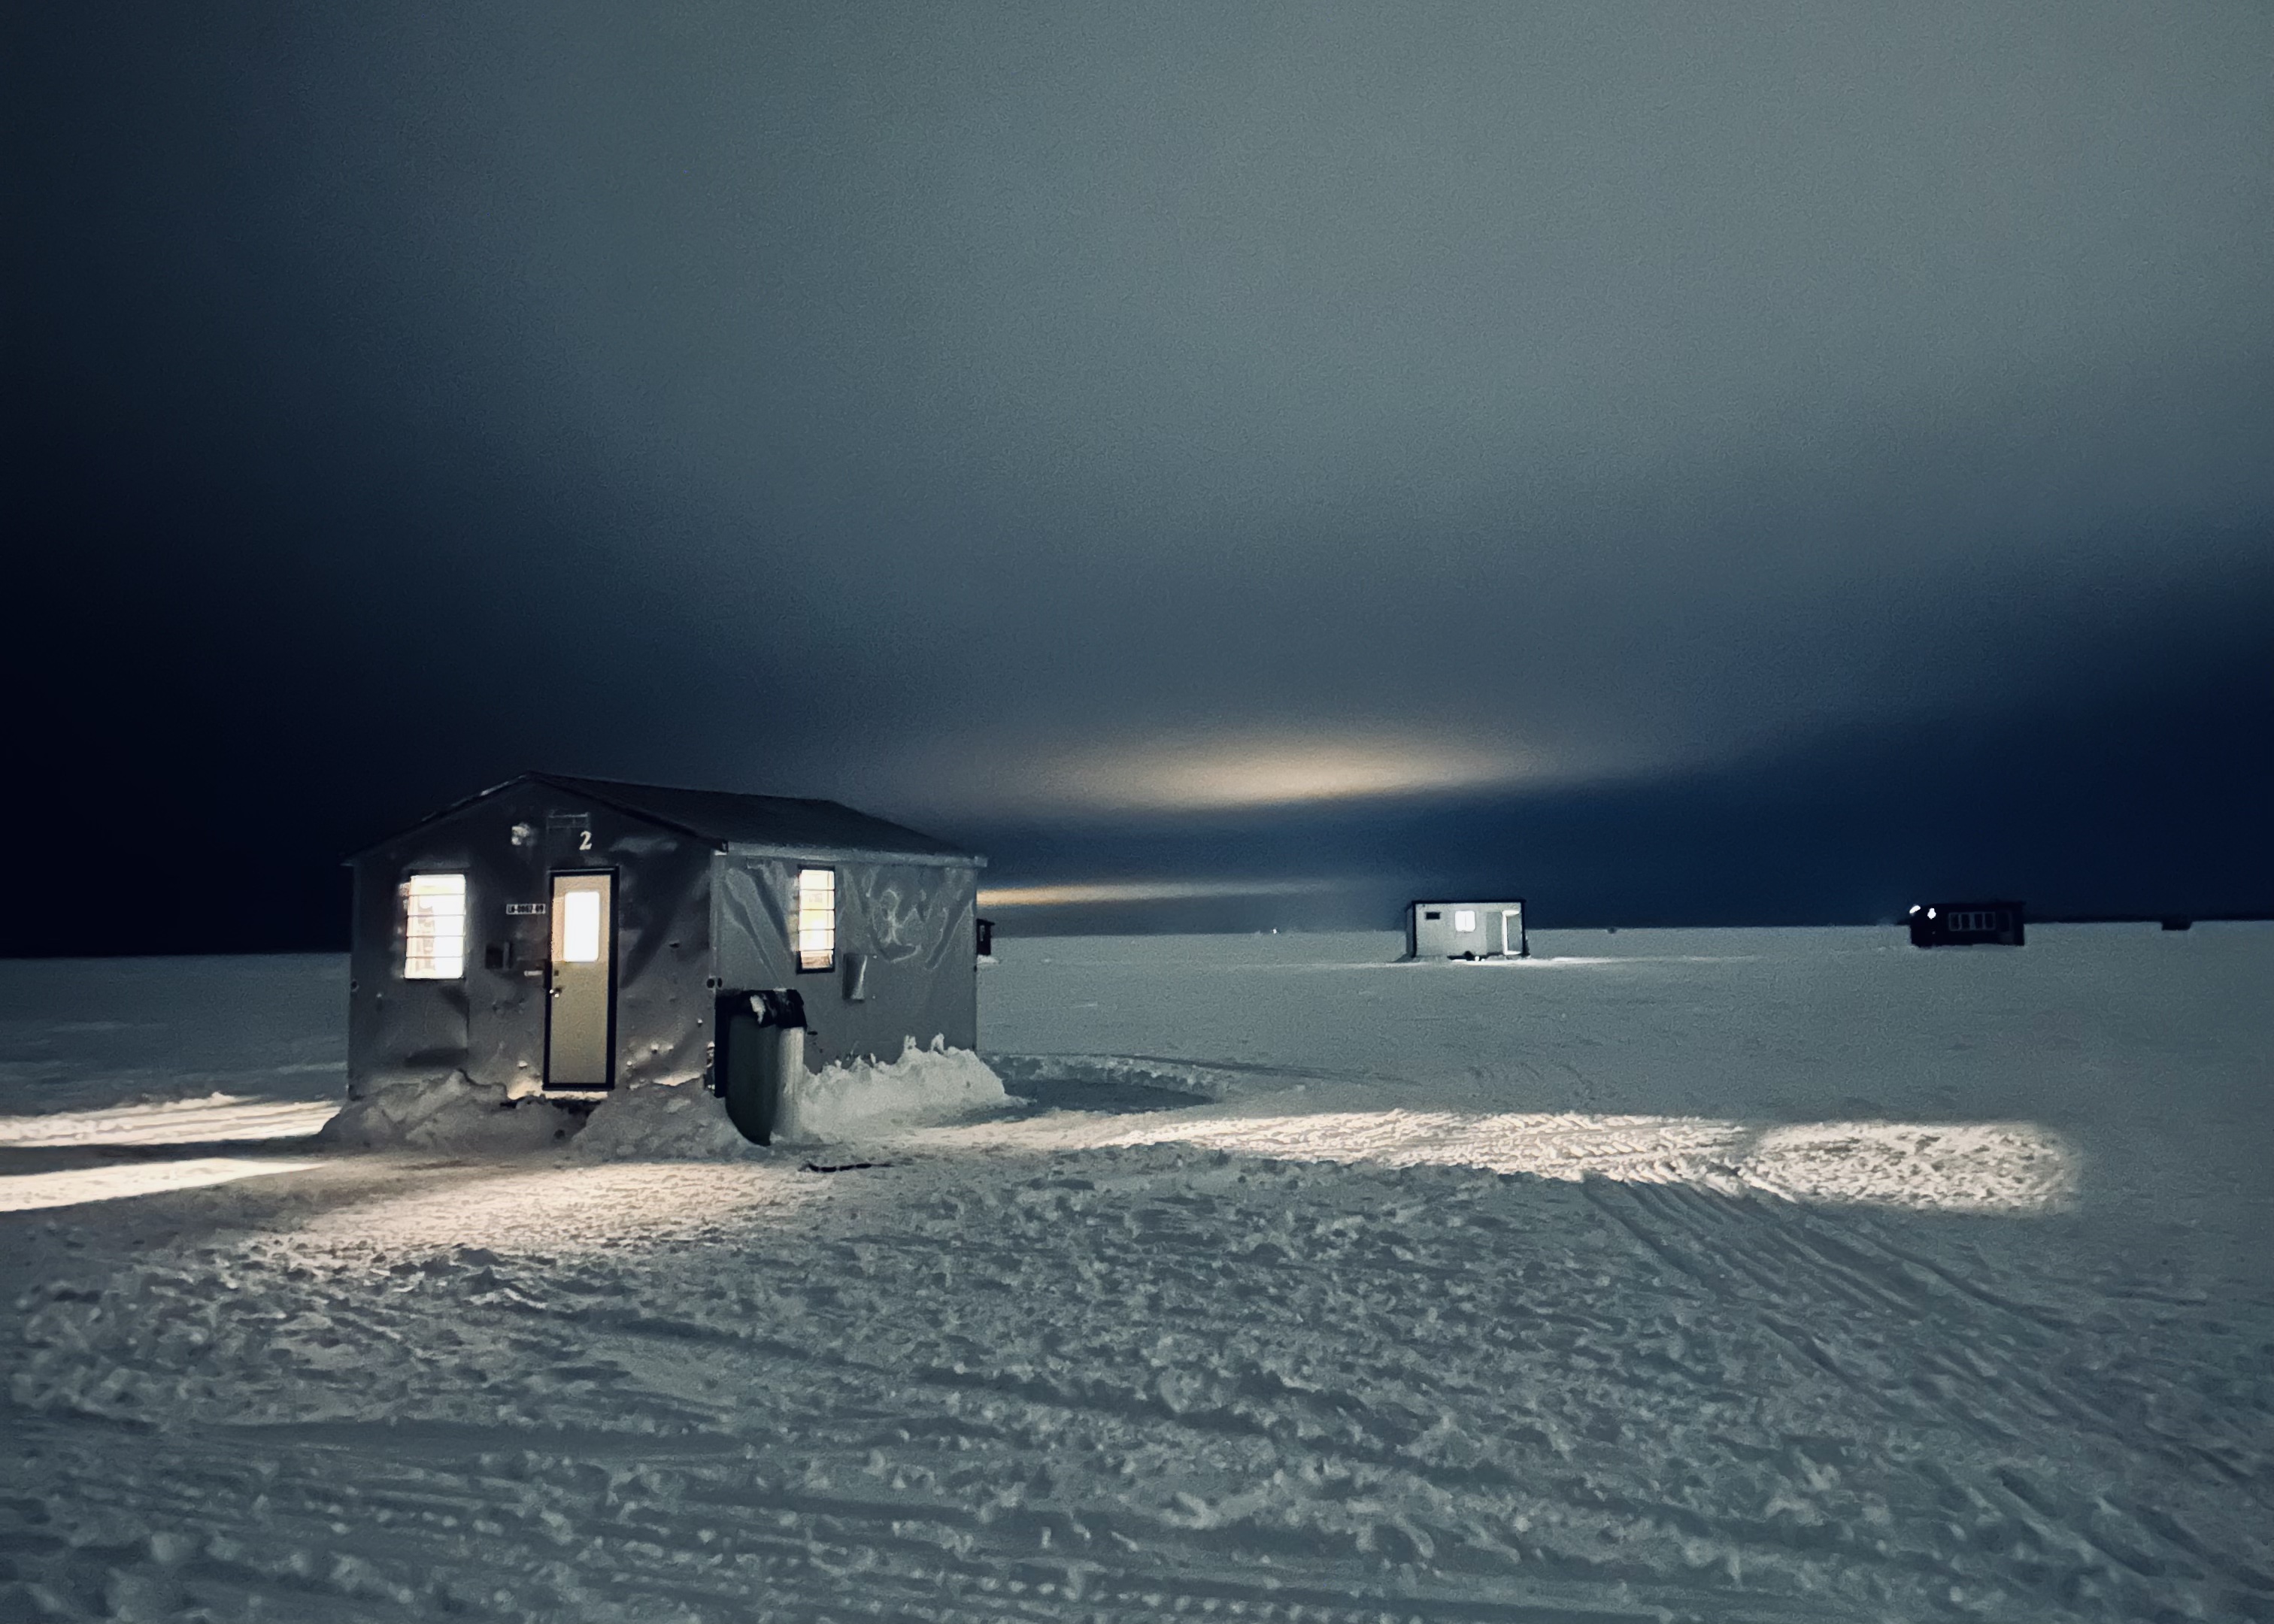 Bam's bungalows illuminated on the ice at night